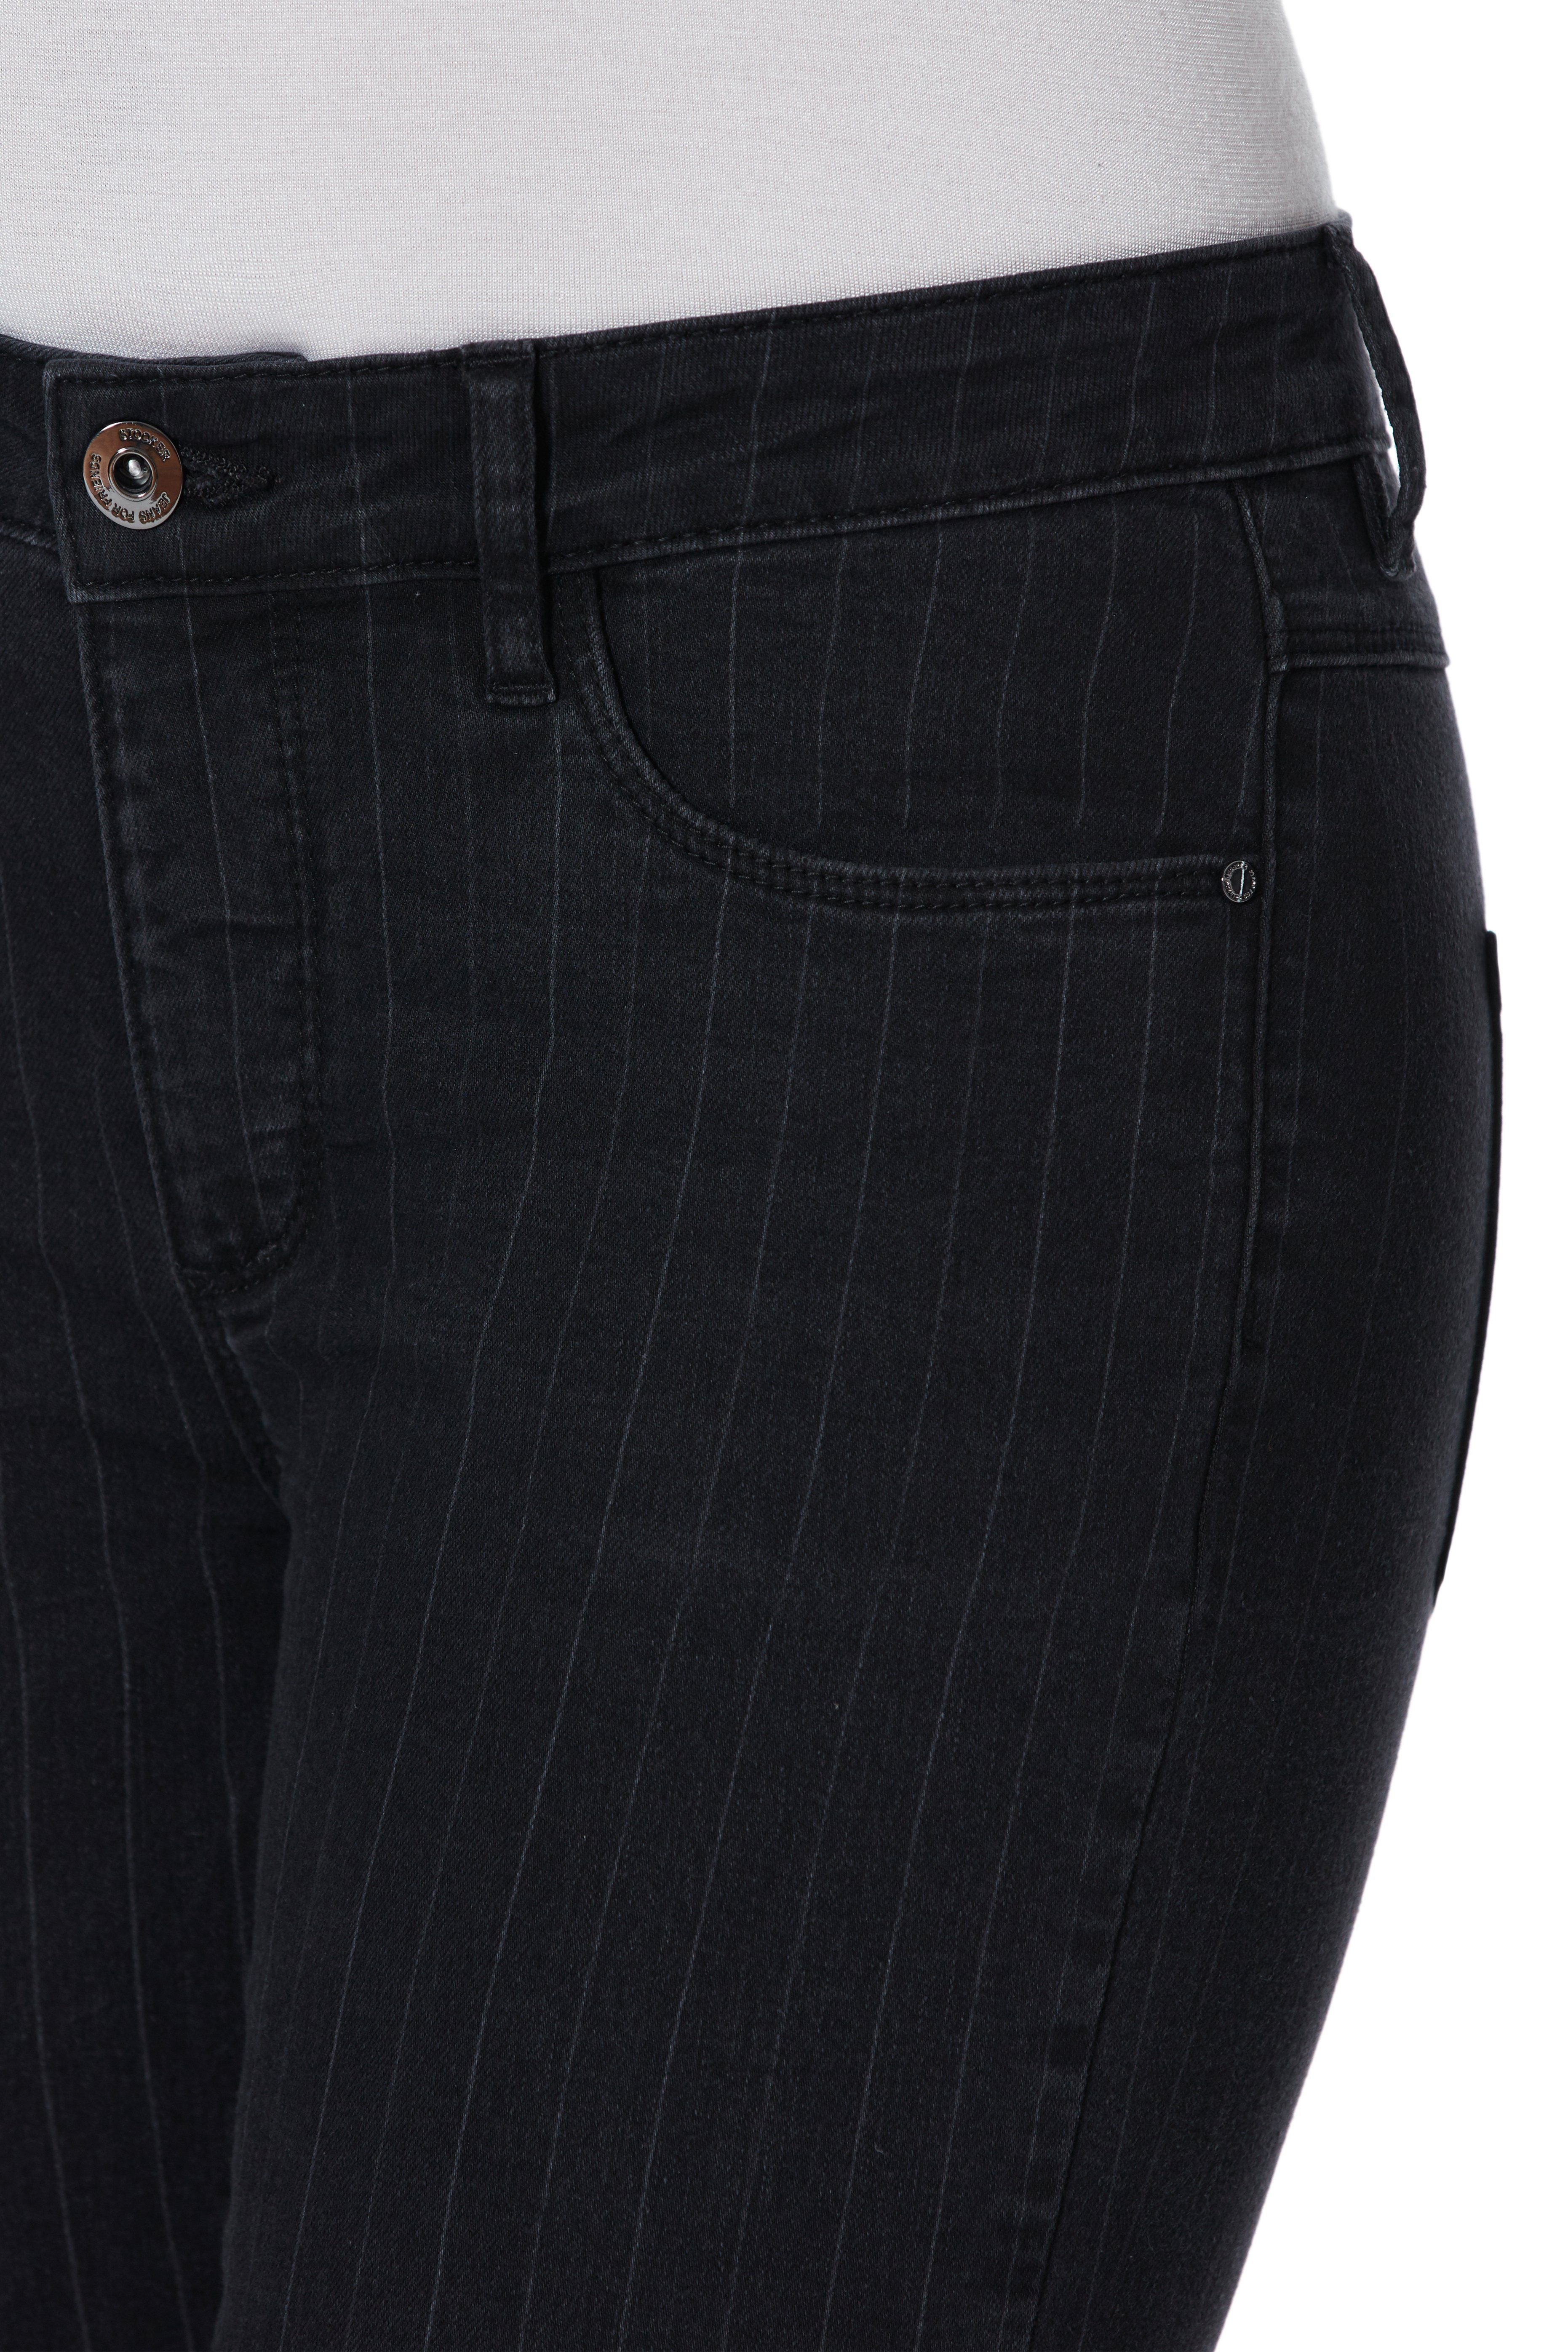 STOOKER WOMEN Style Florenz Black Denim Hose - Jeans Stretch Slim Slim-fit-Jeans Damen - Strip Fit